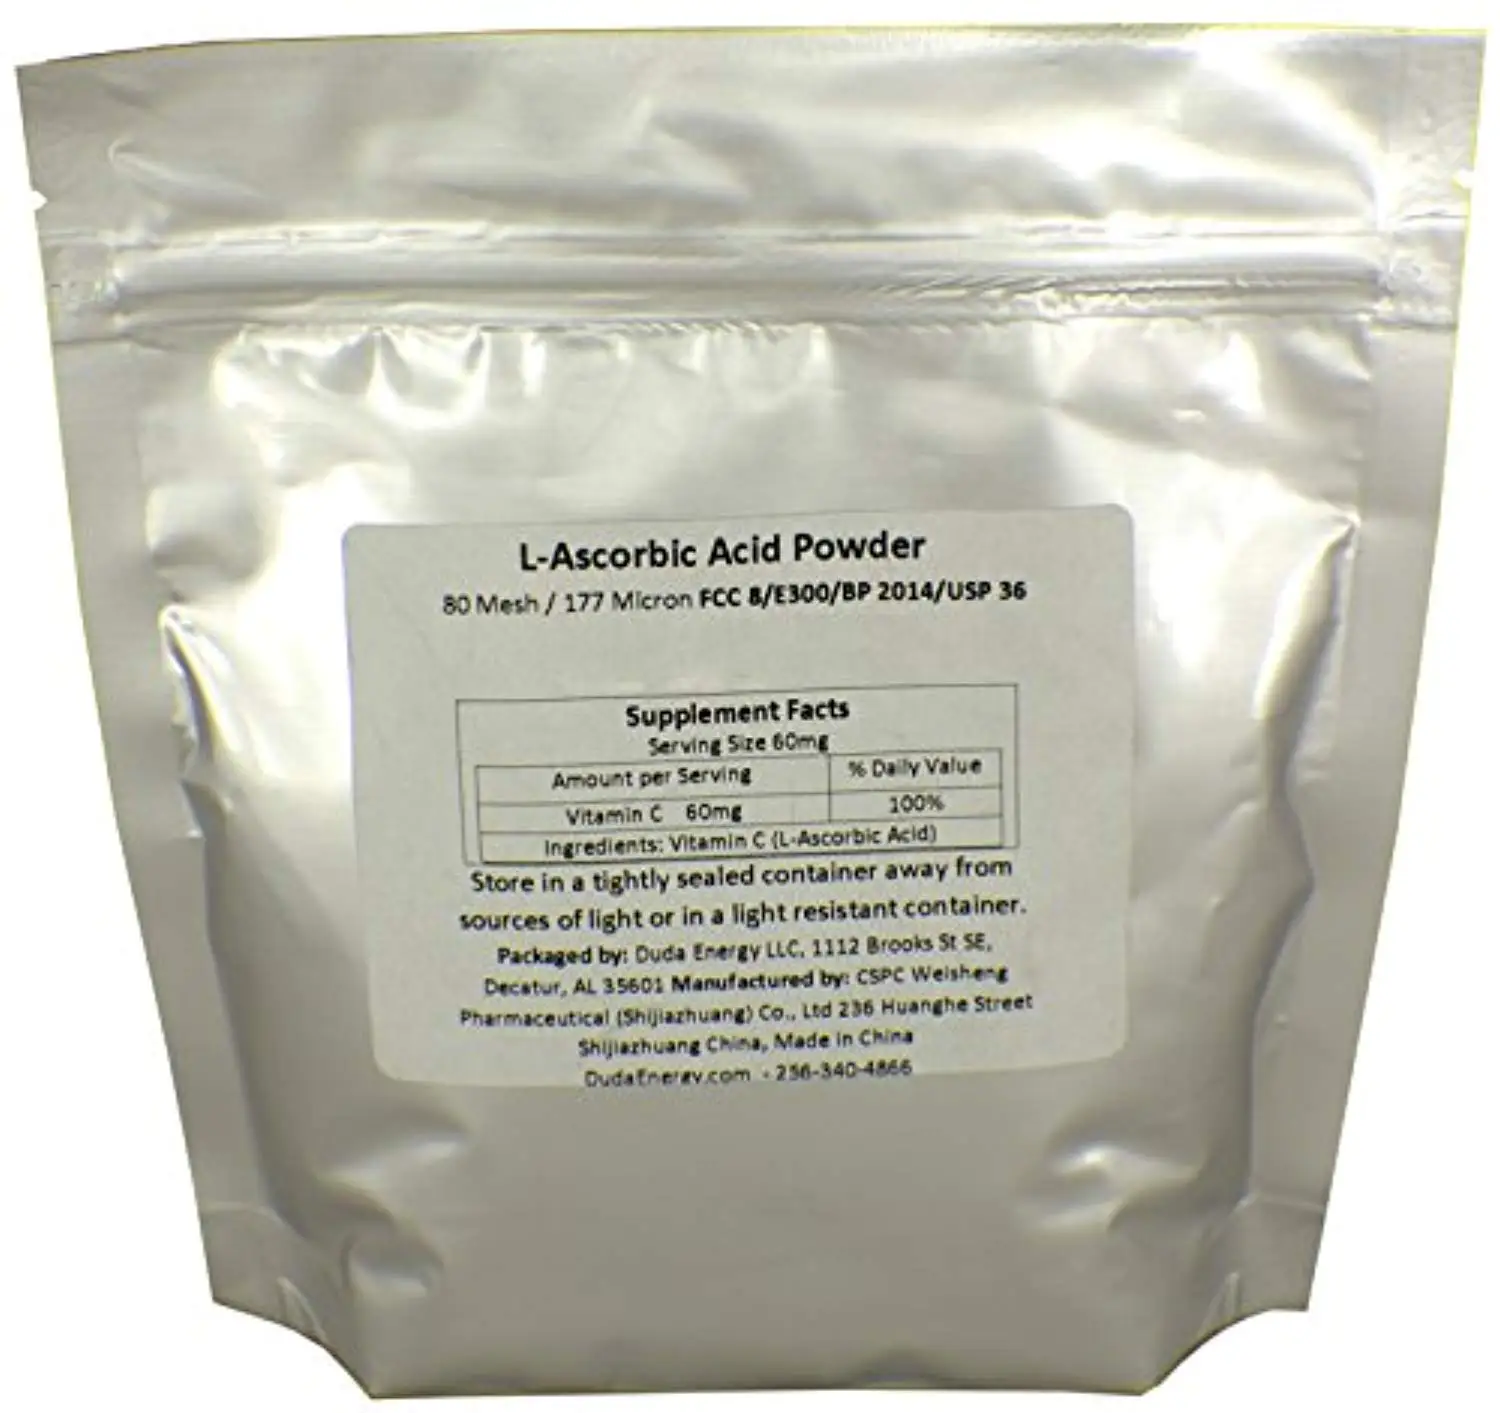 Bag of L-Ascorbic Acid Powder 99+% Food Grade USP36/BP2012 Naturally Fermented Pure White Crystals Form of Vitamin C, 1 lb